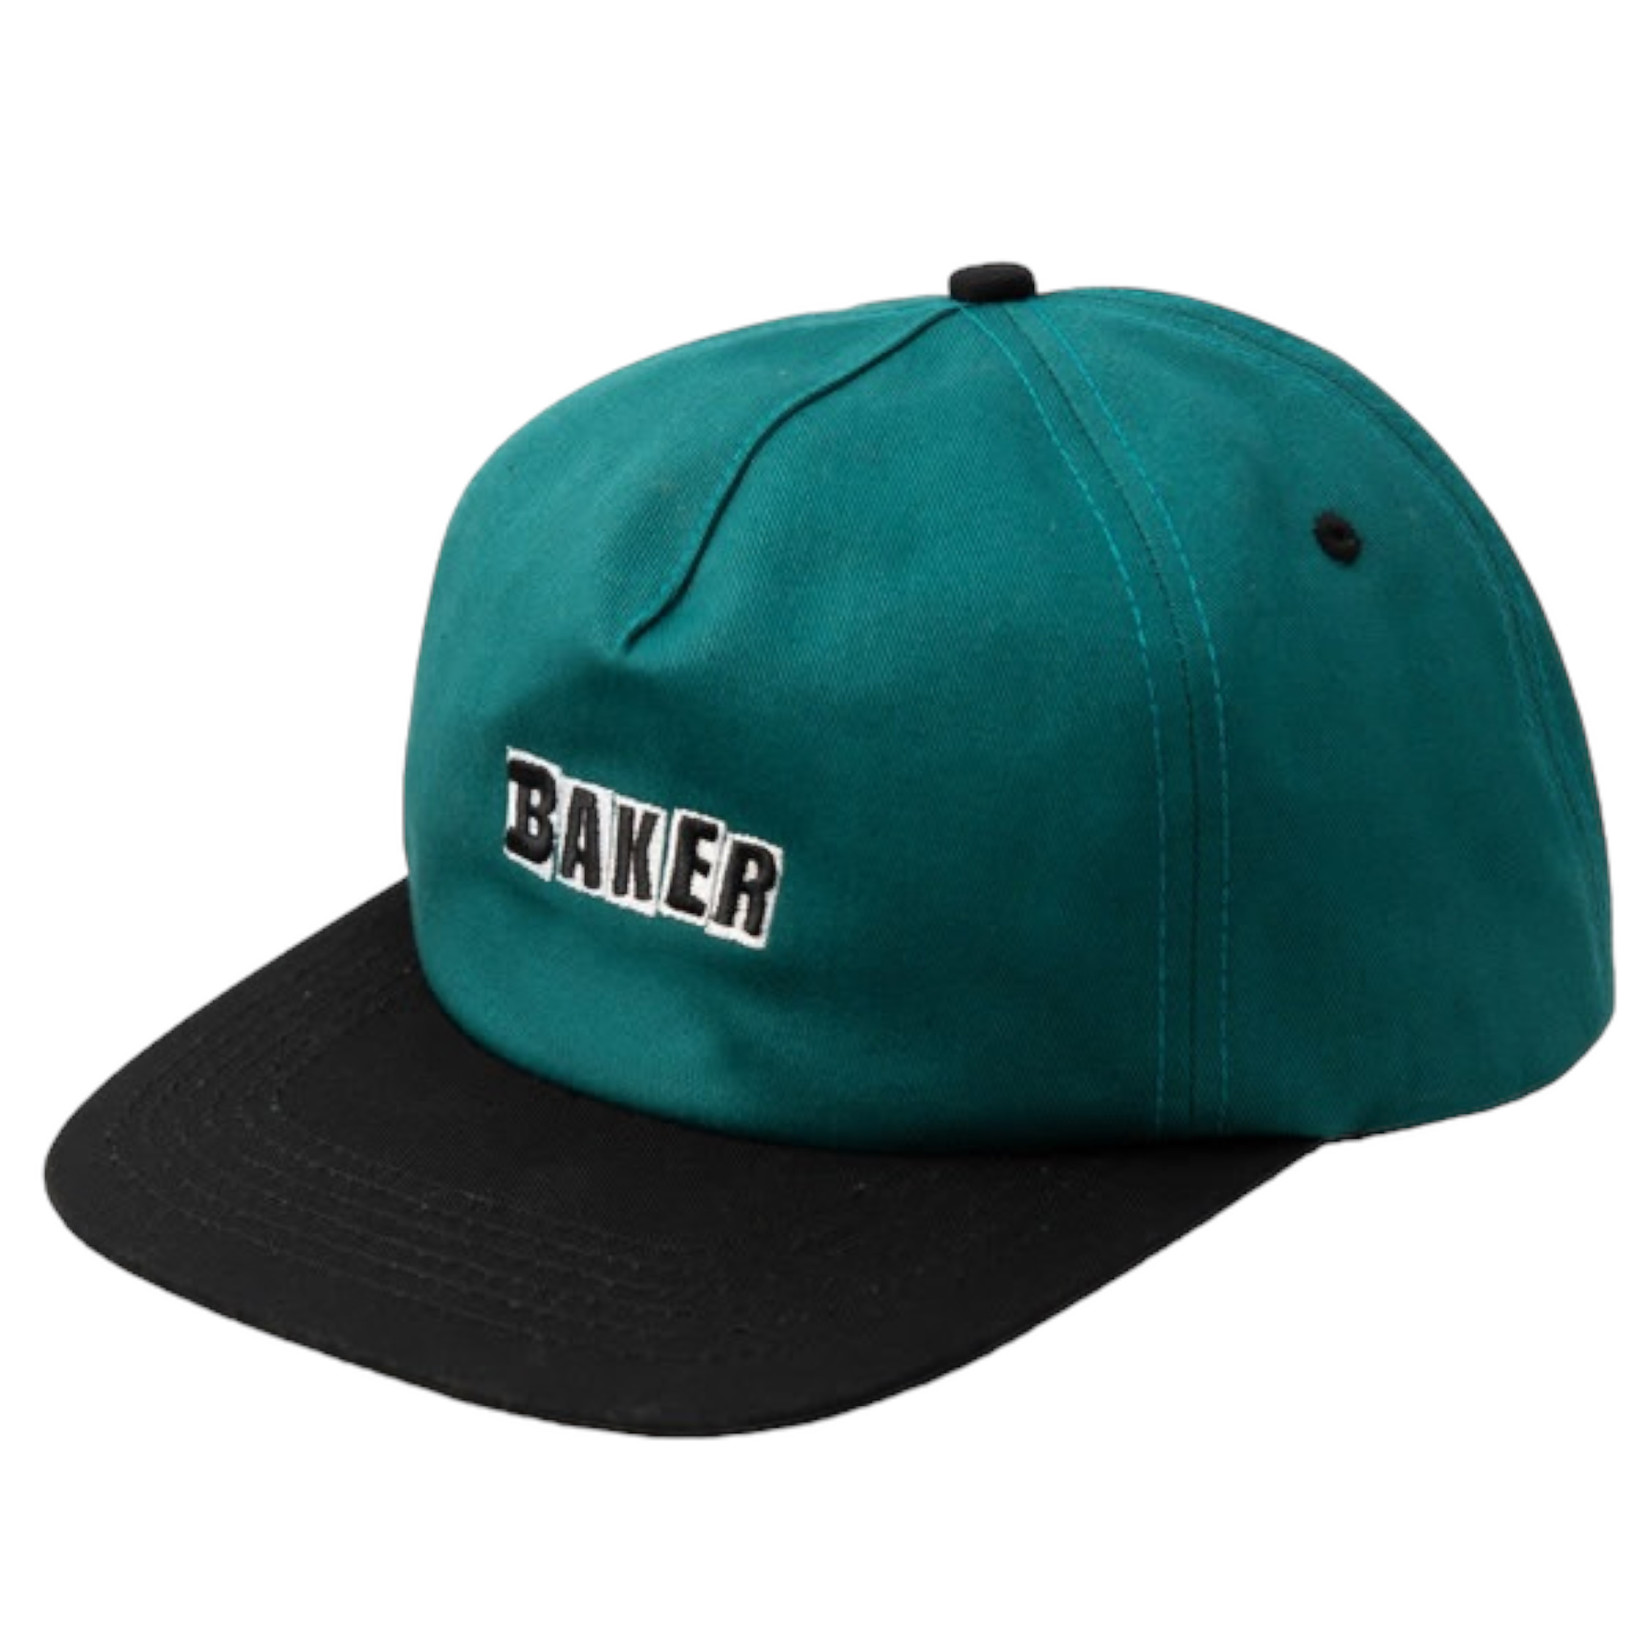 Baker Baker Brand Logo Snapback (Black/Aqua)